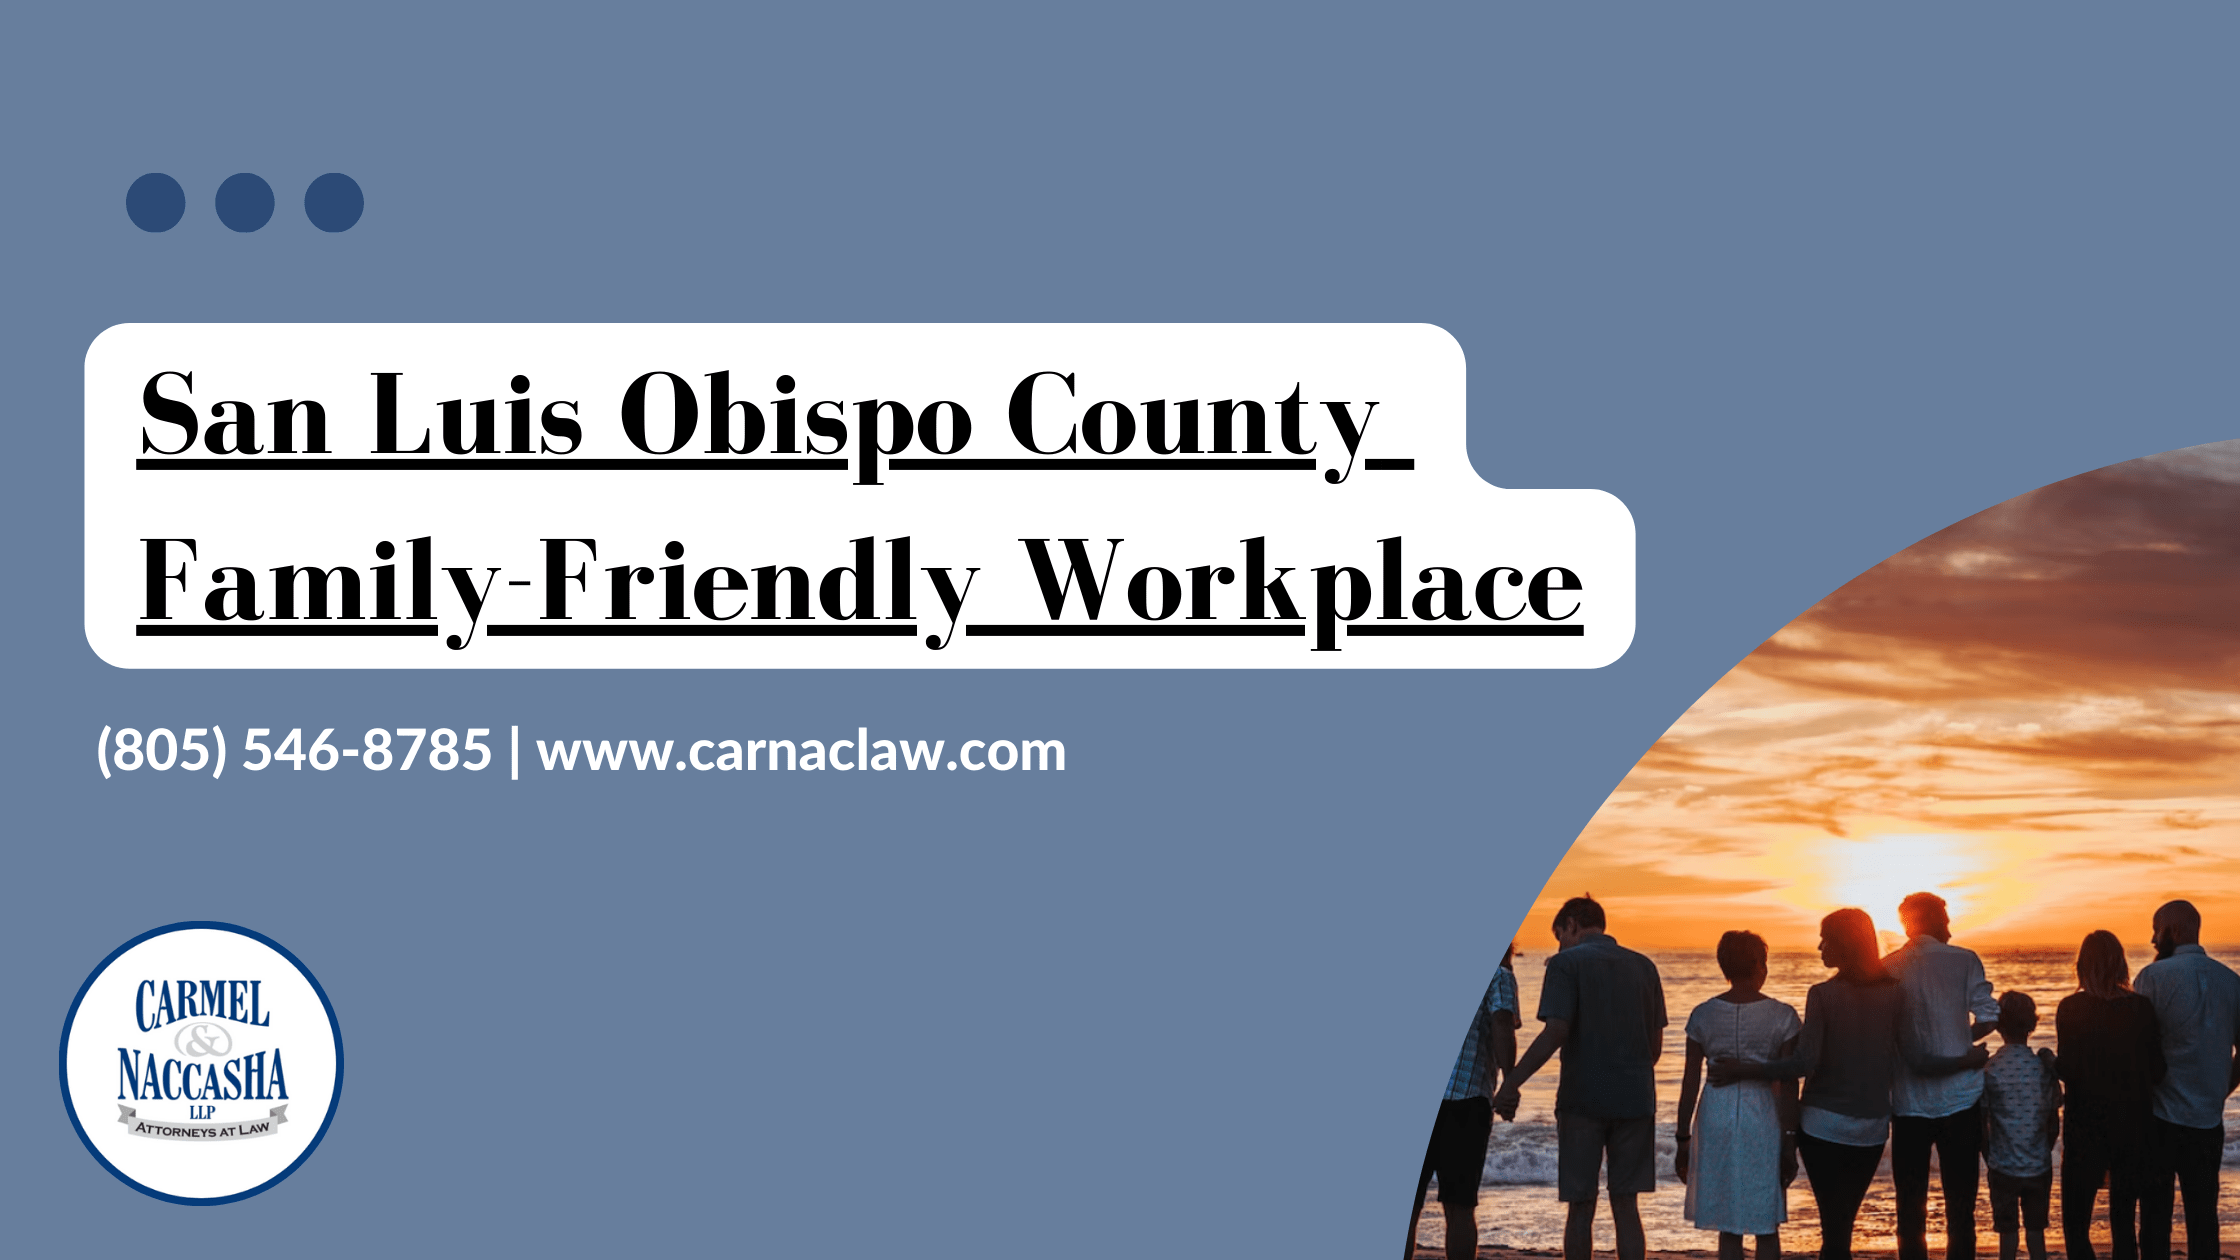 San Luis Obispo County Family-Friendly Workplace